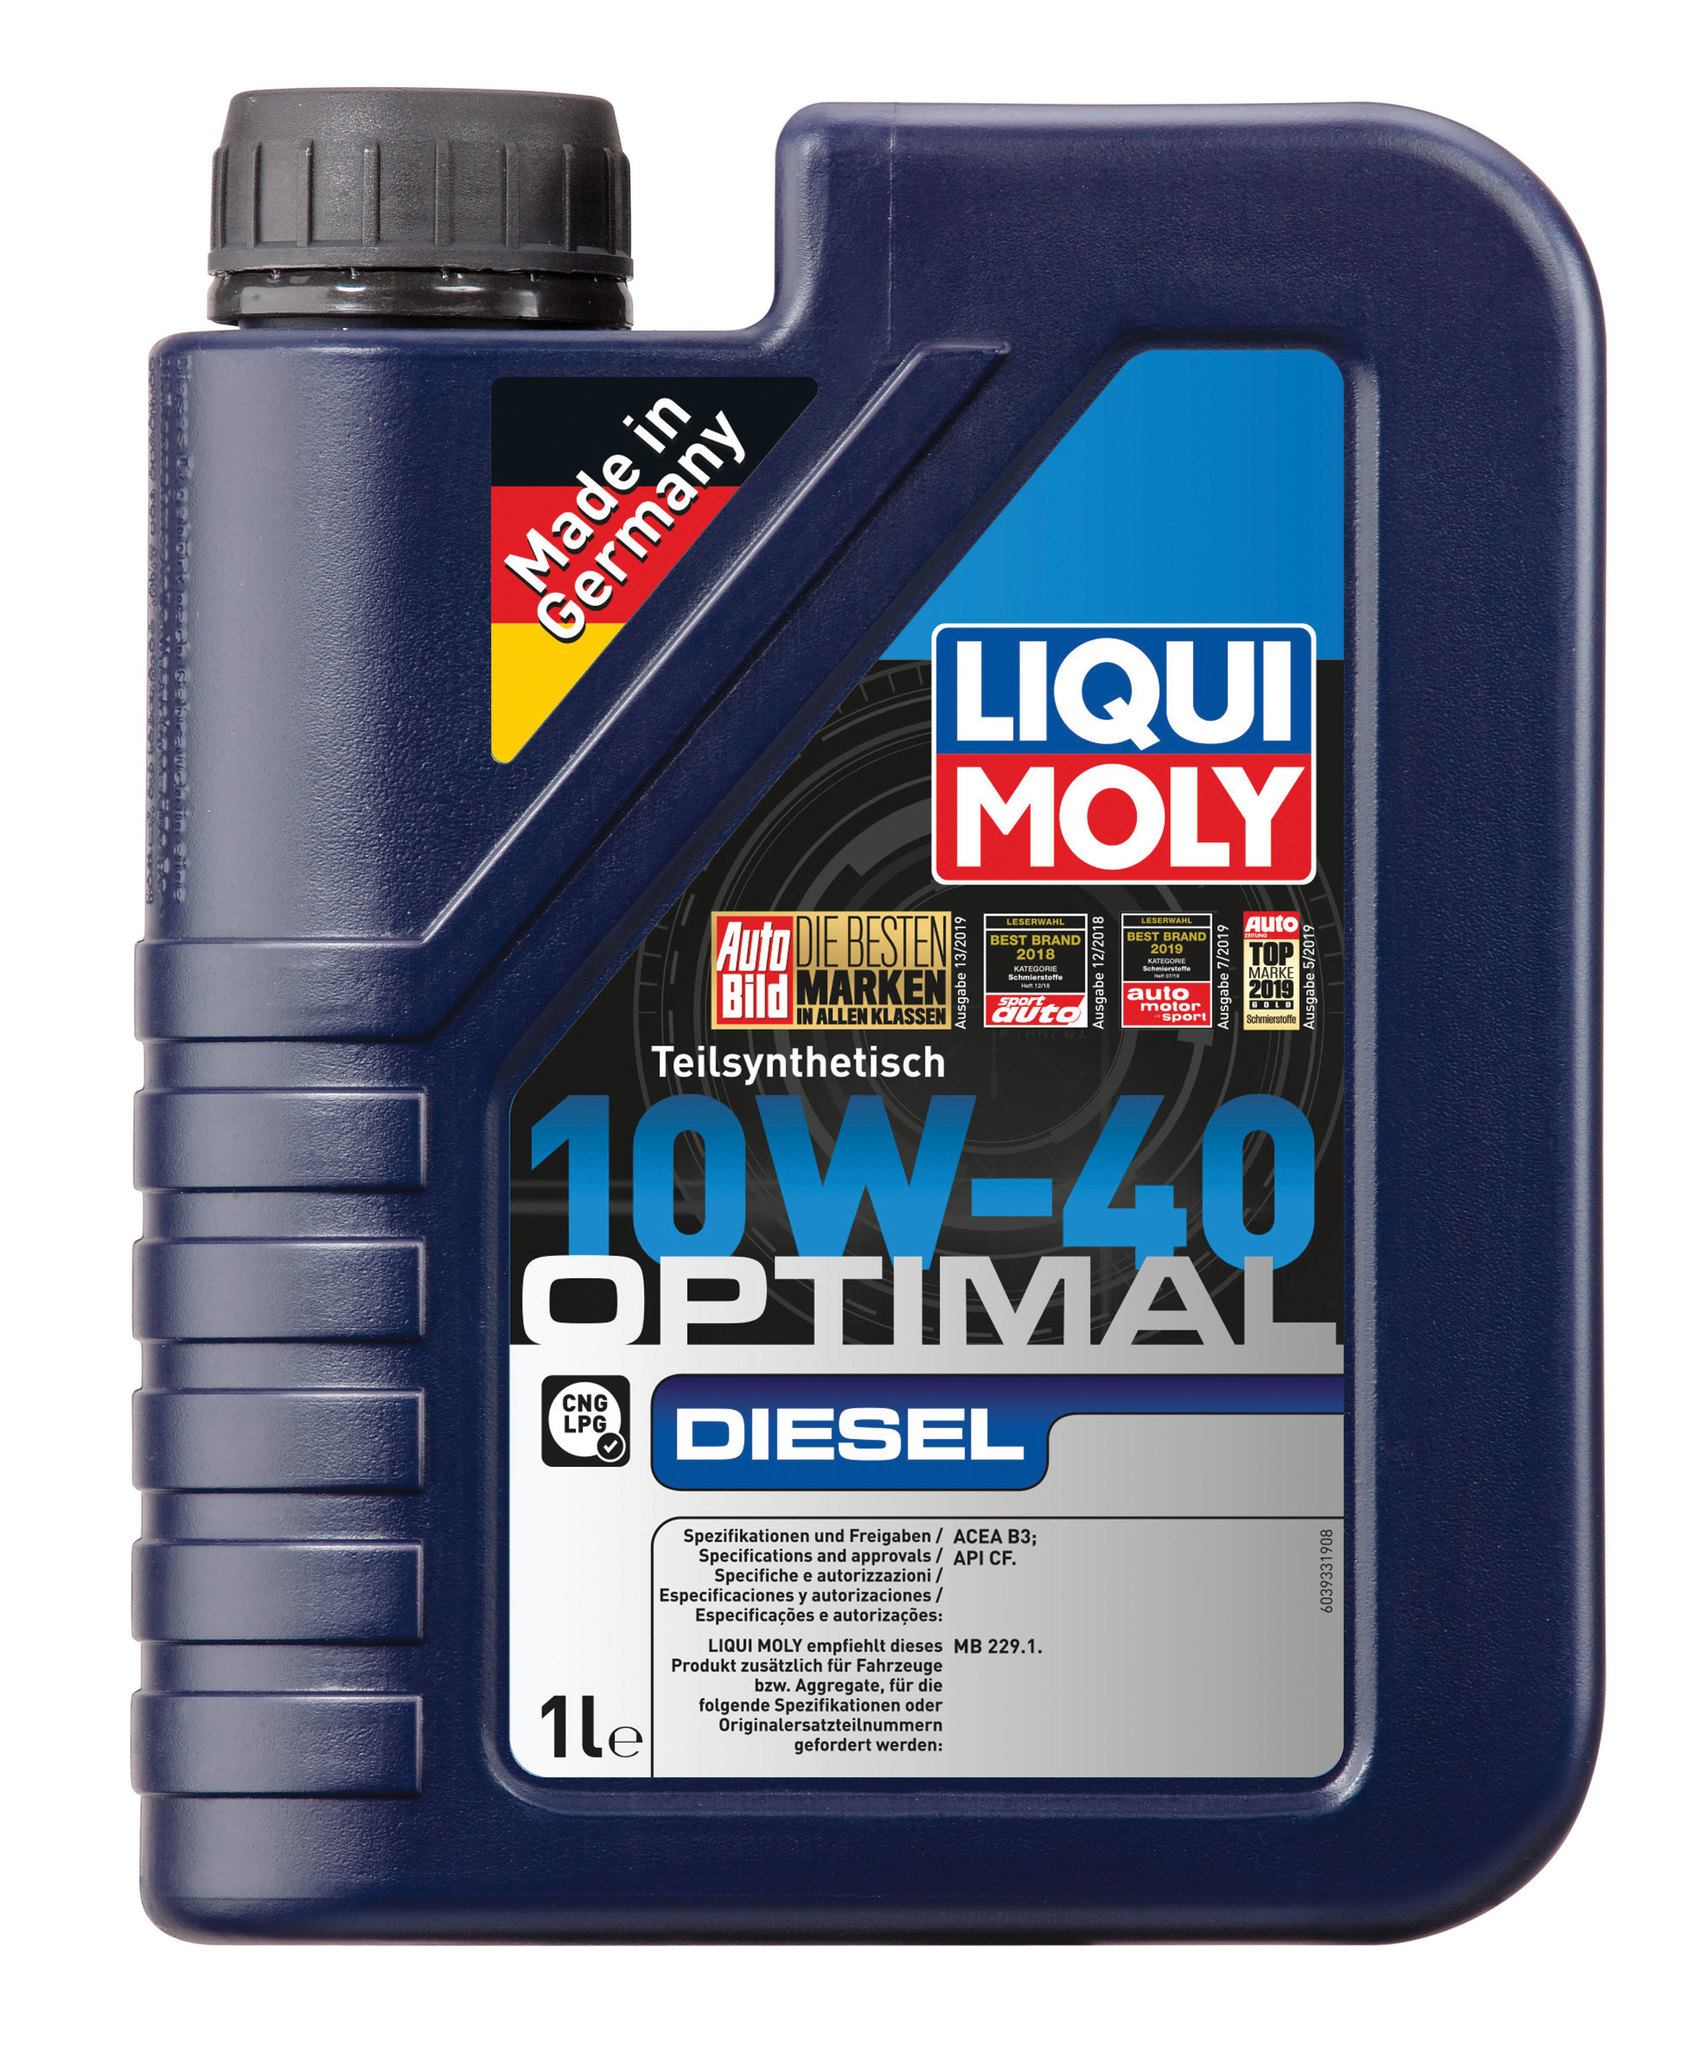 Liqui Moly Optimal Diesel 10W40 Полусинтетическое моторное масло